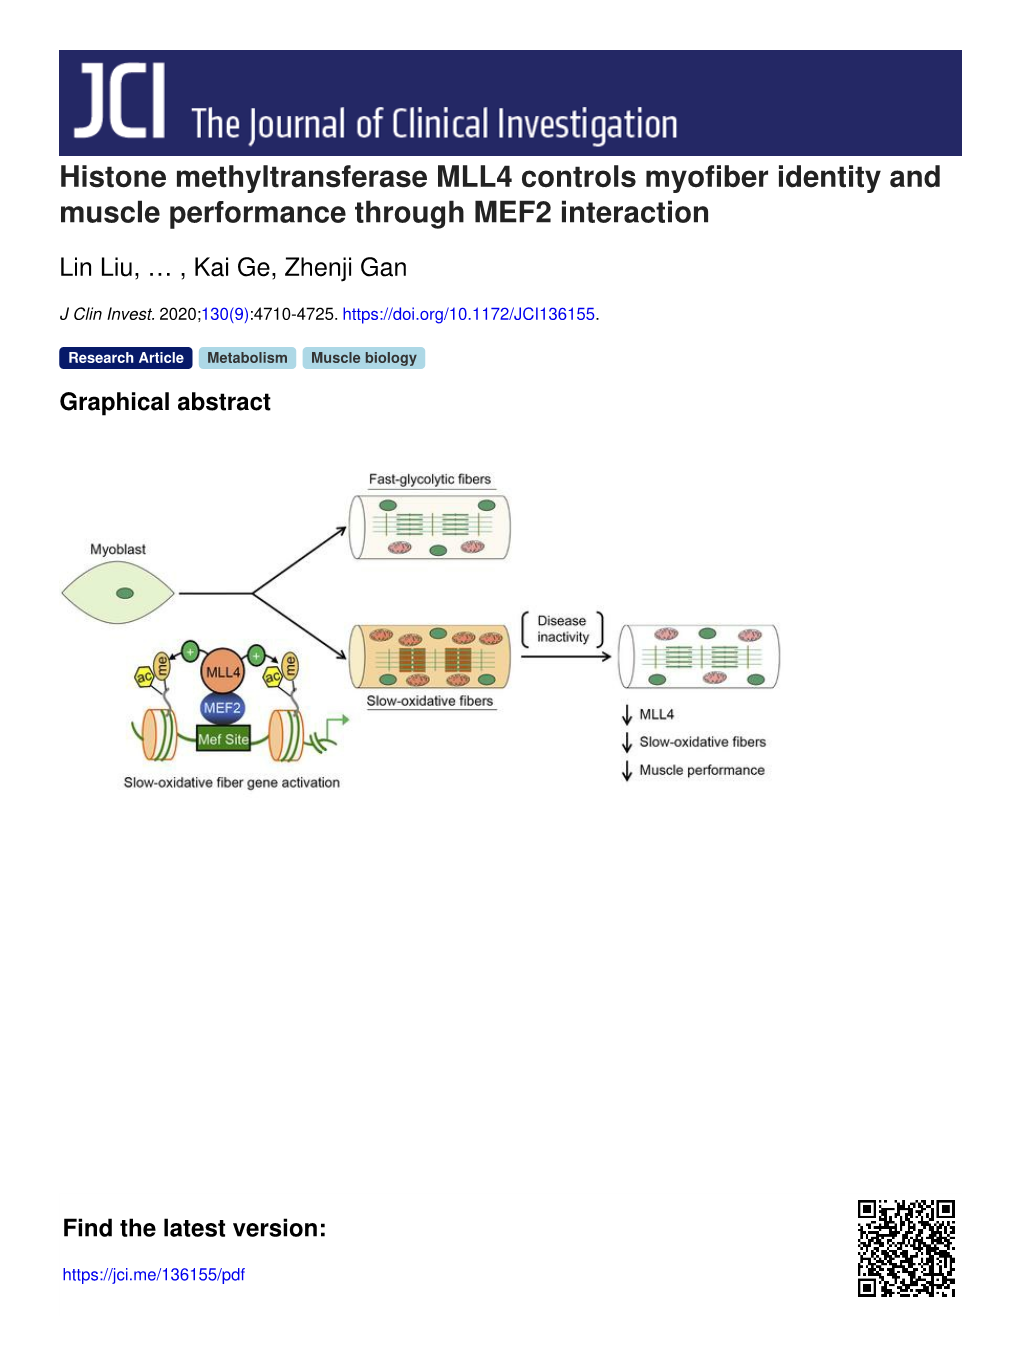 Histone Methyltransferase MLL4 Controls Myofiber Identity and Muscle Performance Through MEF2 Interaction